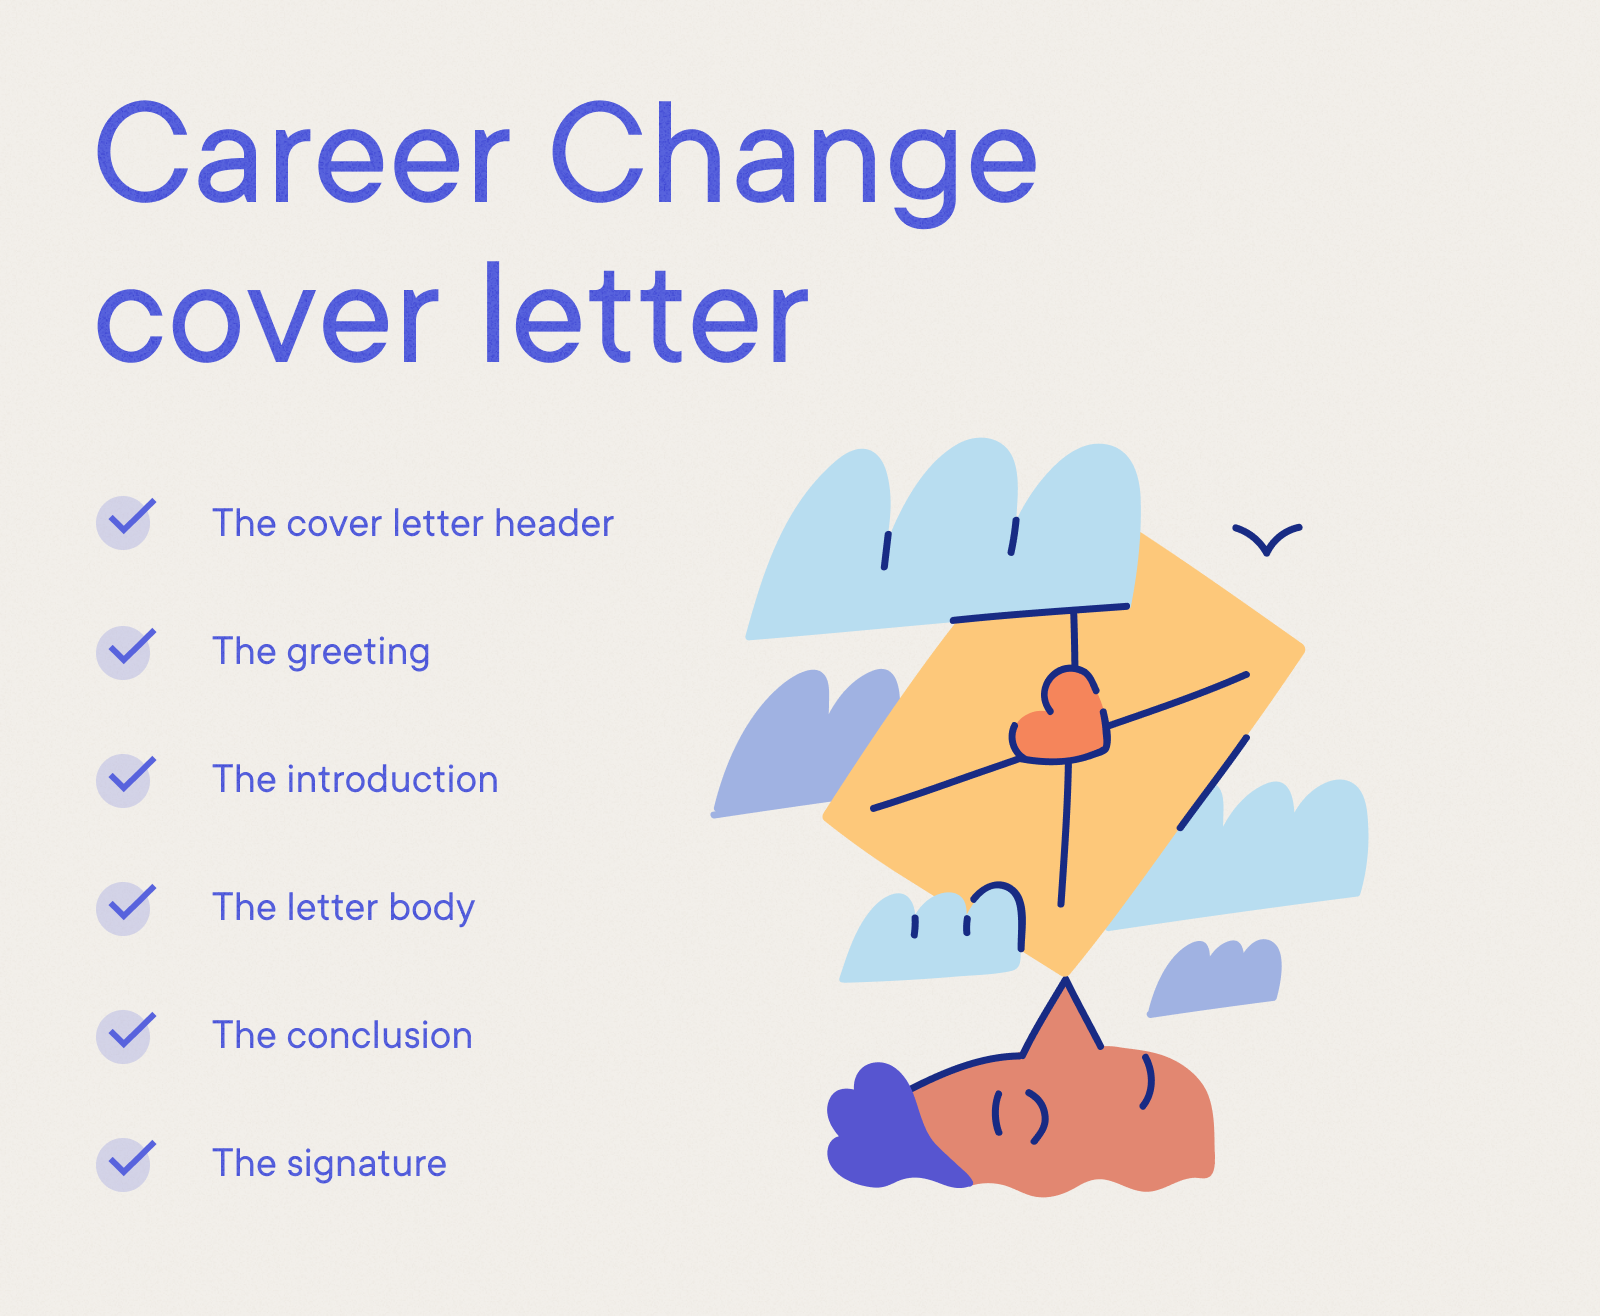 Career Change Cover Letter Example - Career Change cover letter